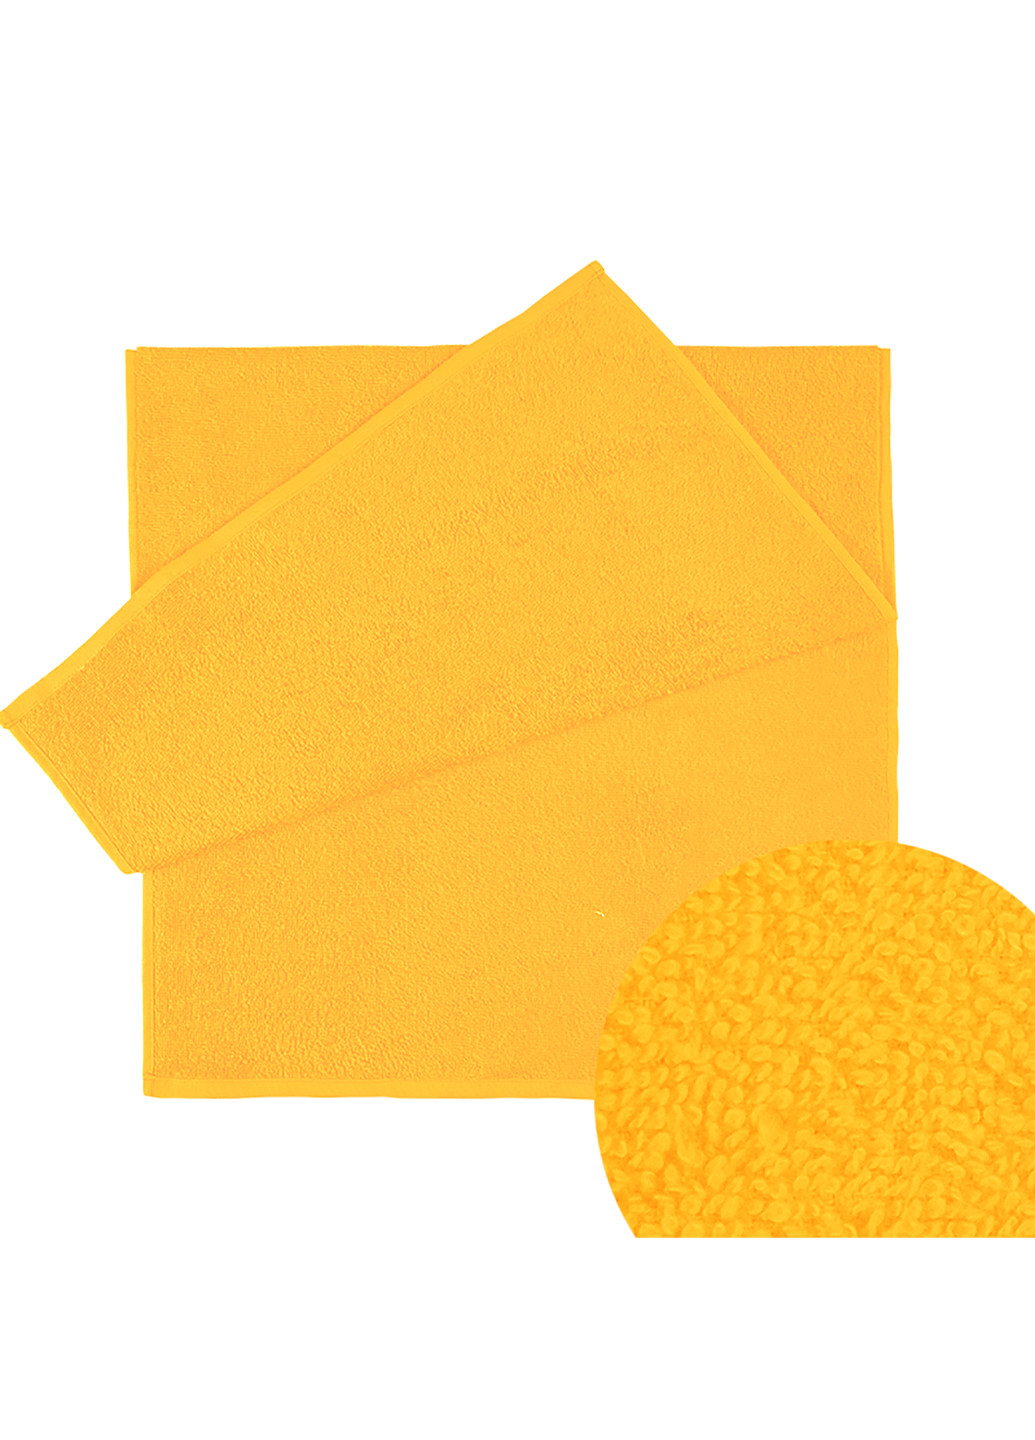 Ярослав полотенце яр-400 махровое 70х140 однотонный желтый производство - Украина